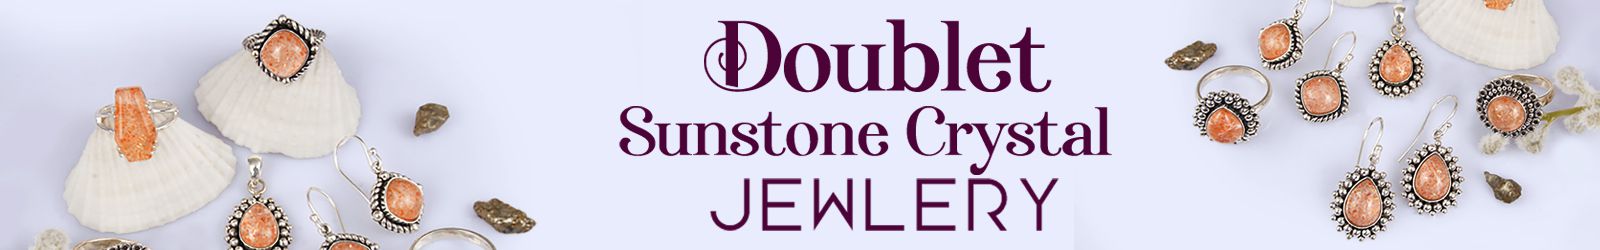 Wholesale Doublet Sunstone Crystal Jewelry